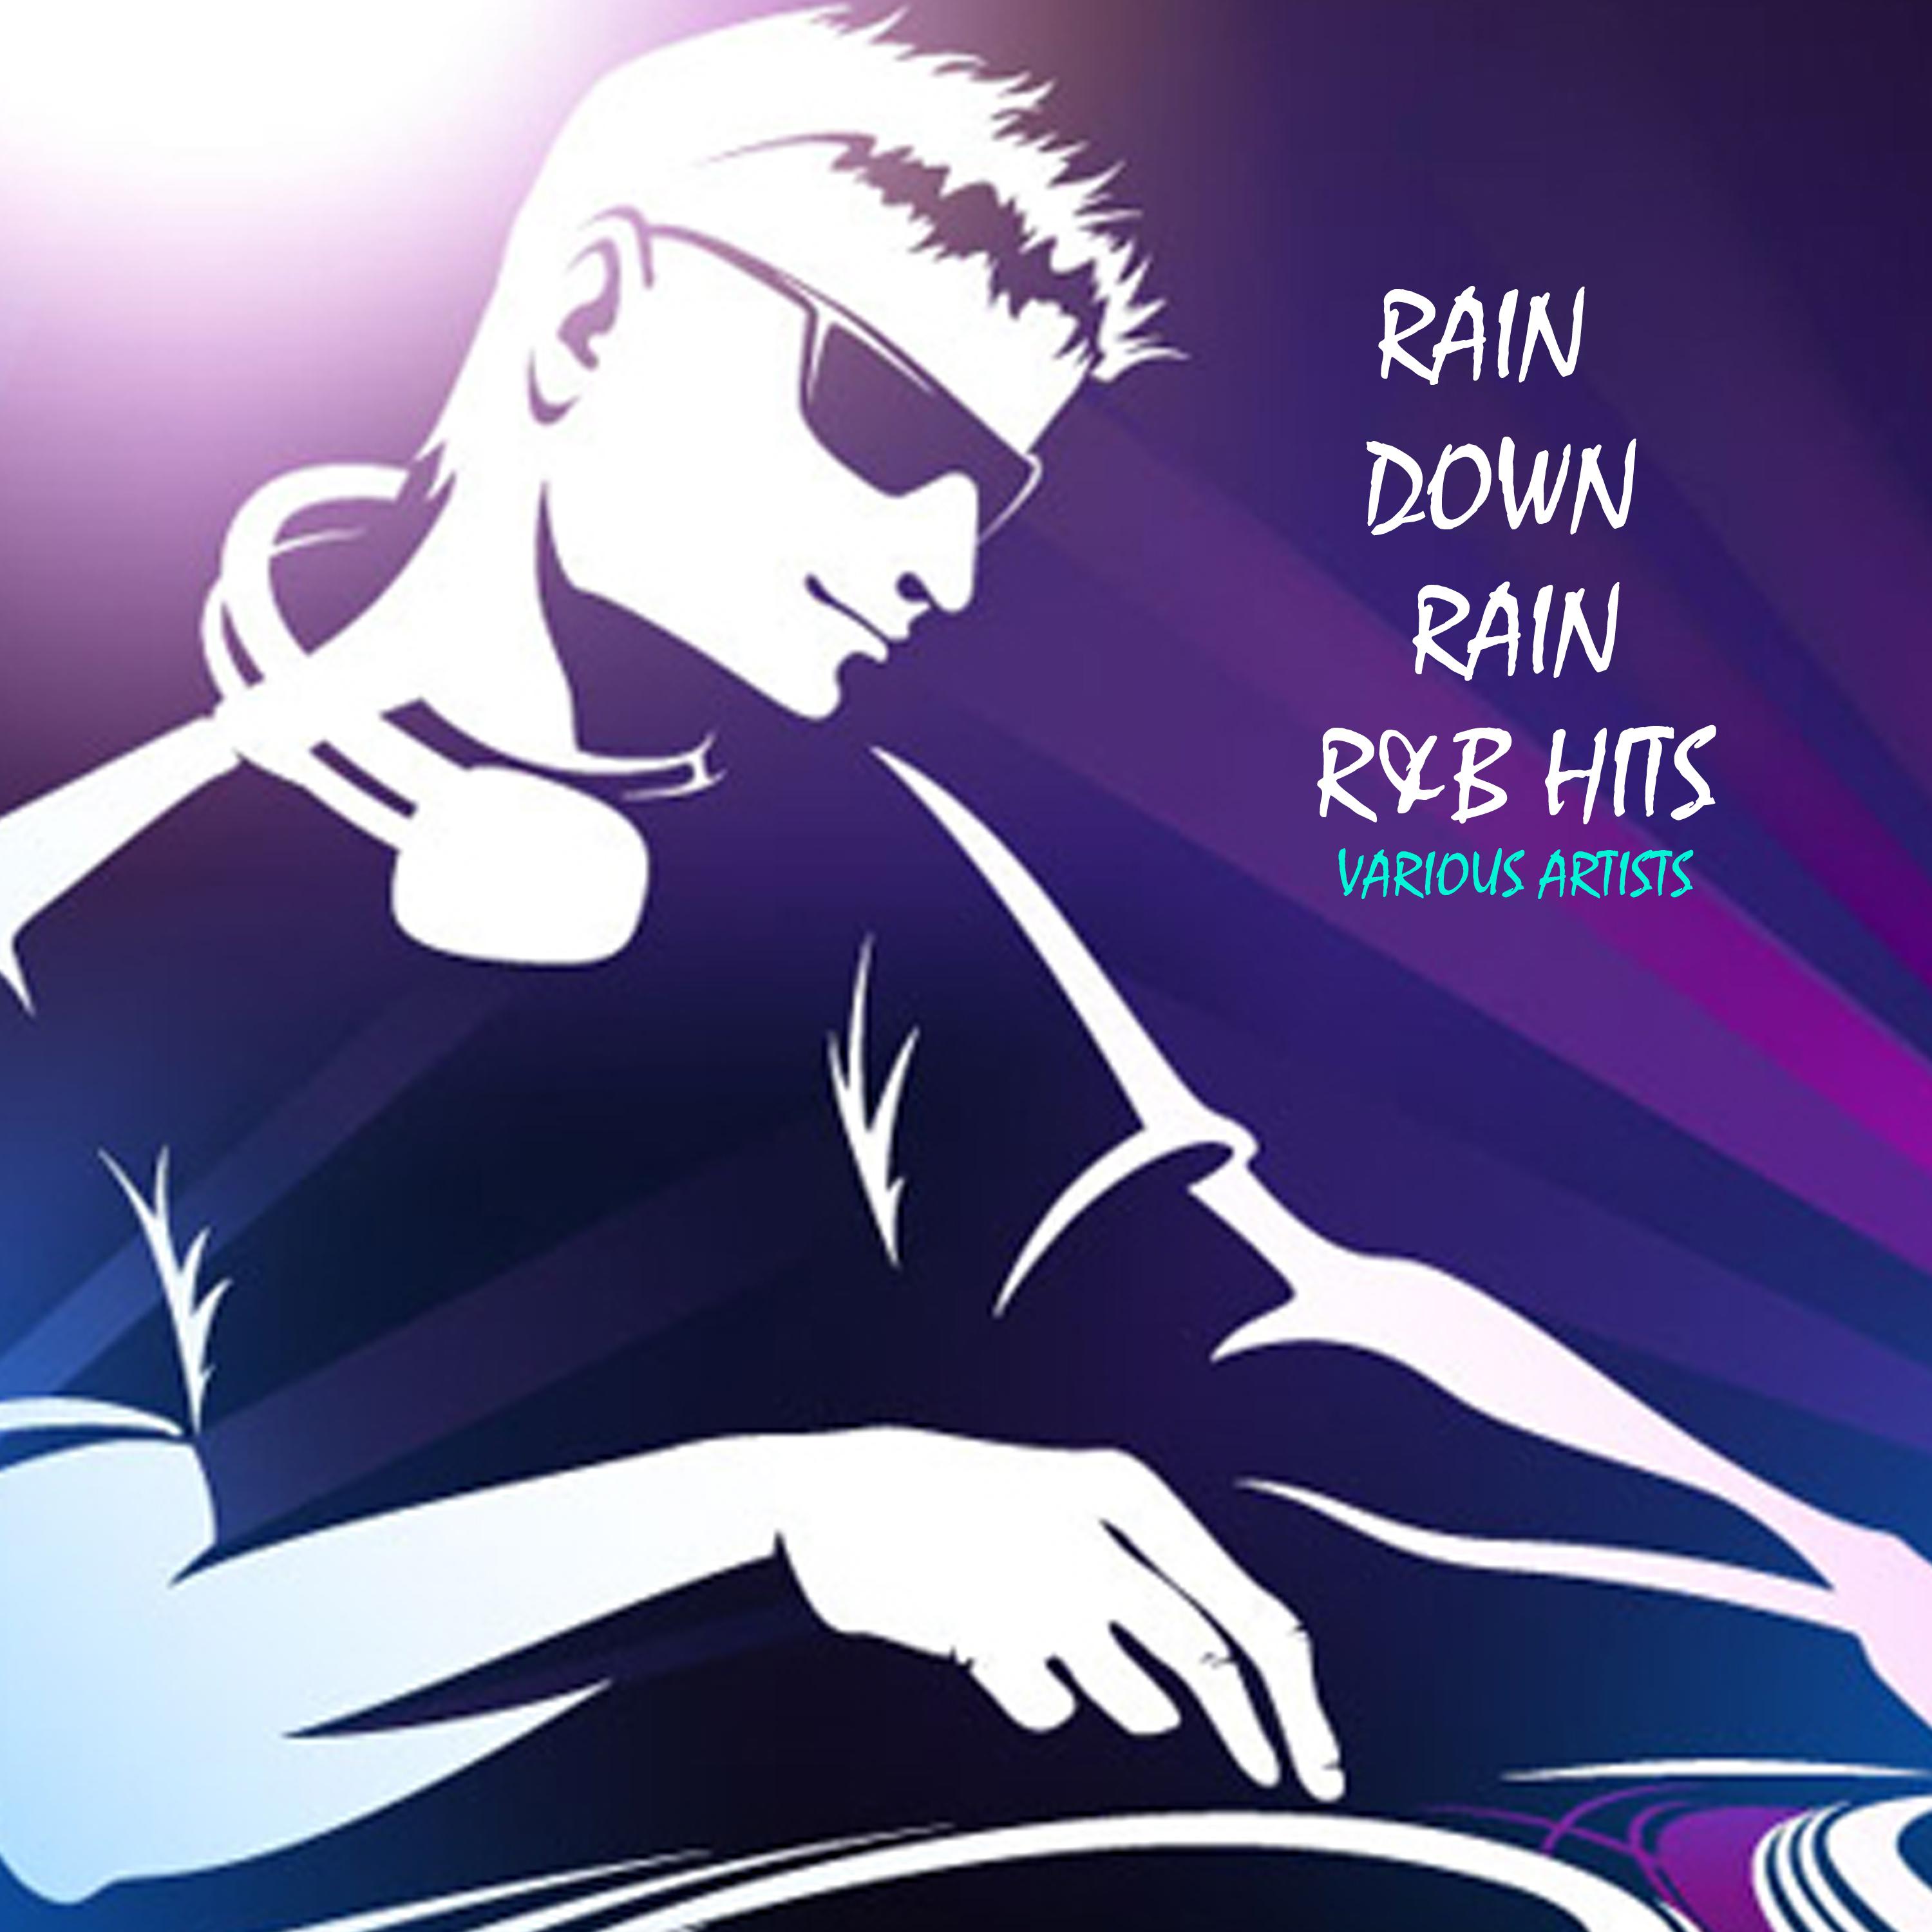 Rain Down Rain - R&B Hits